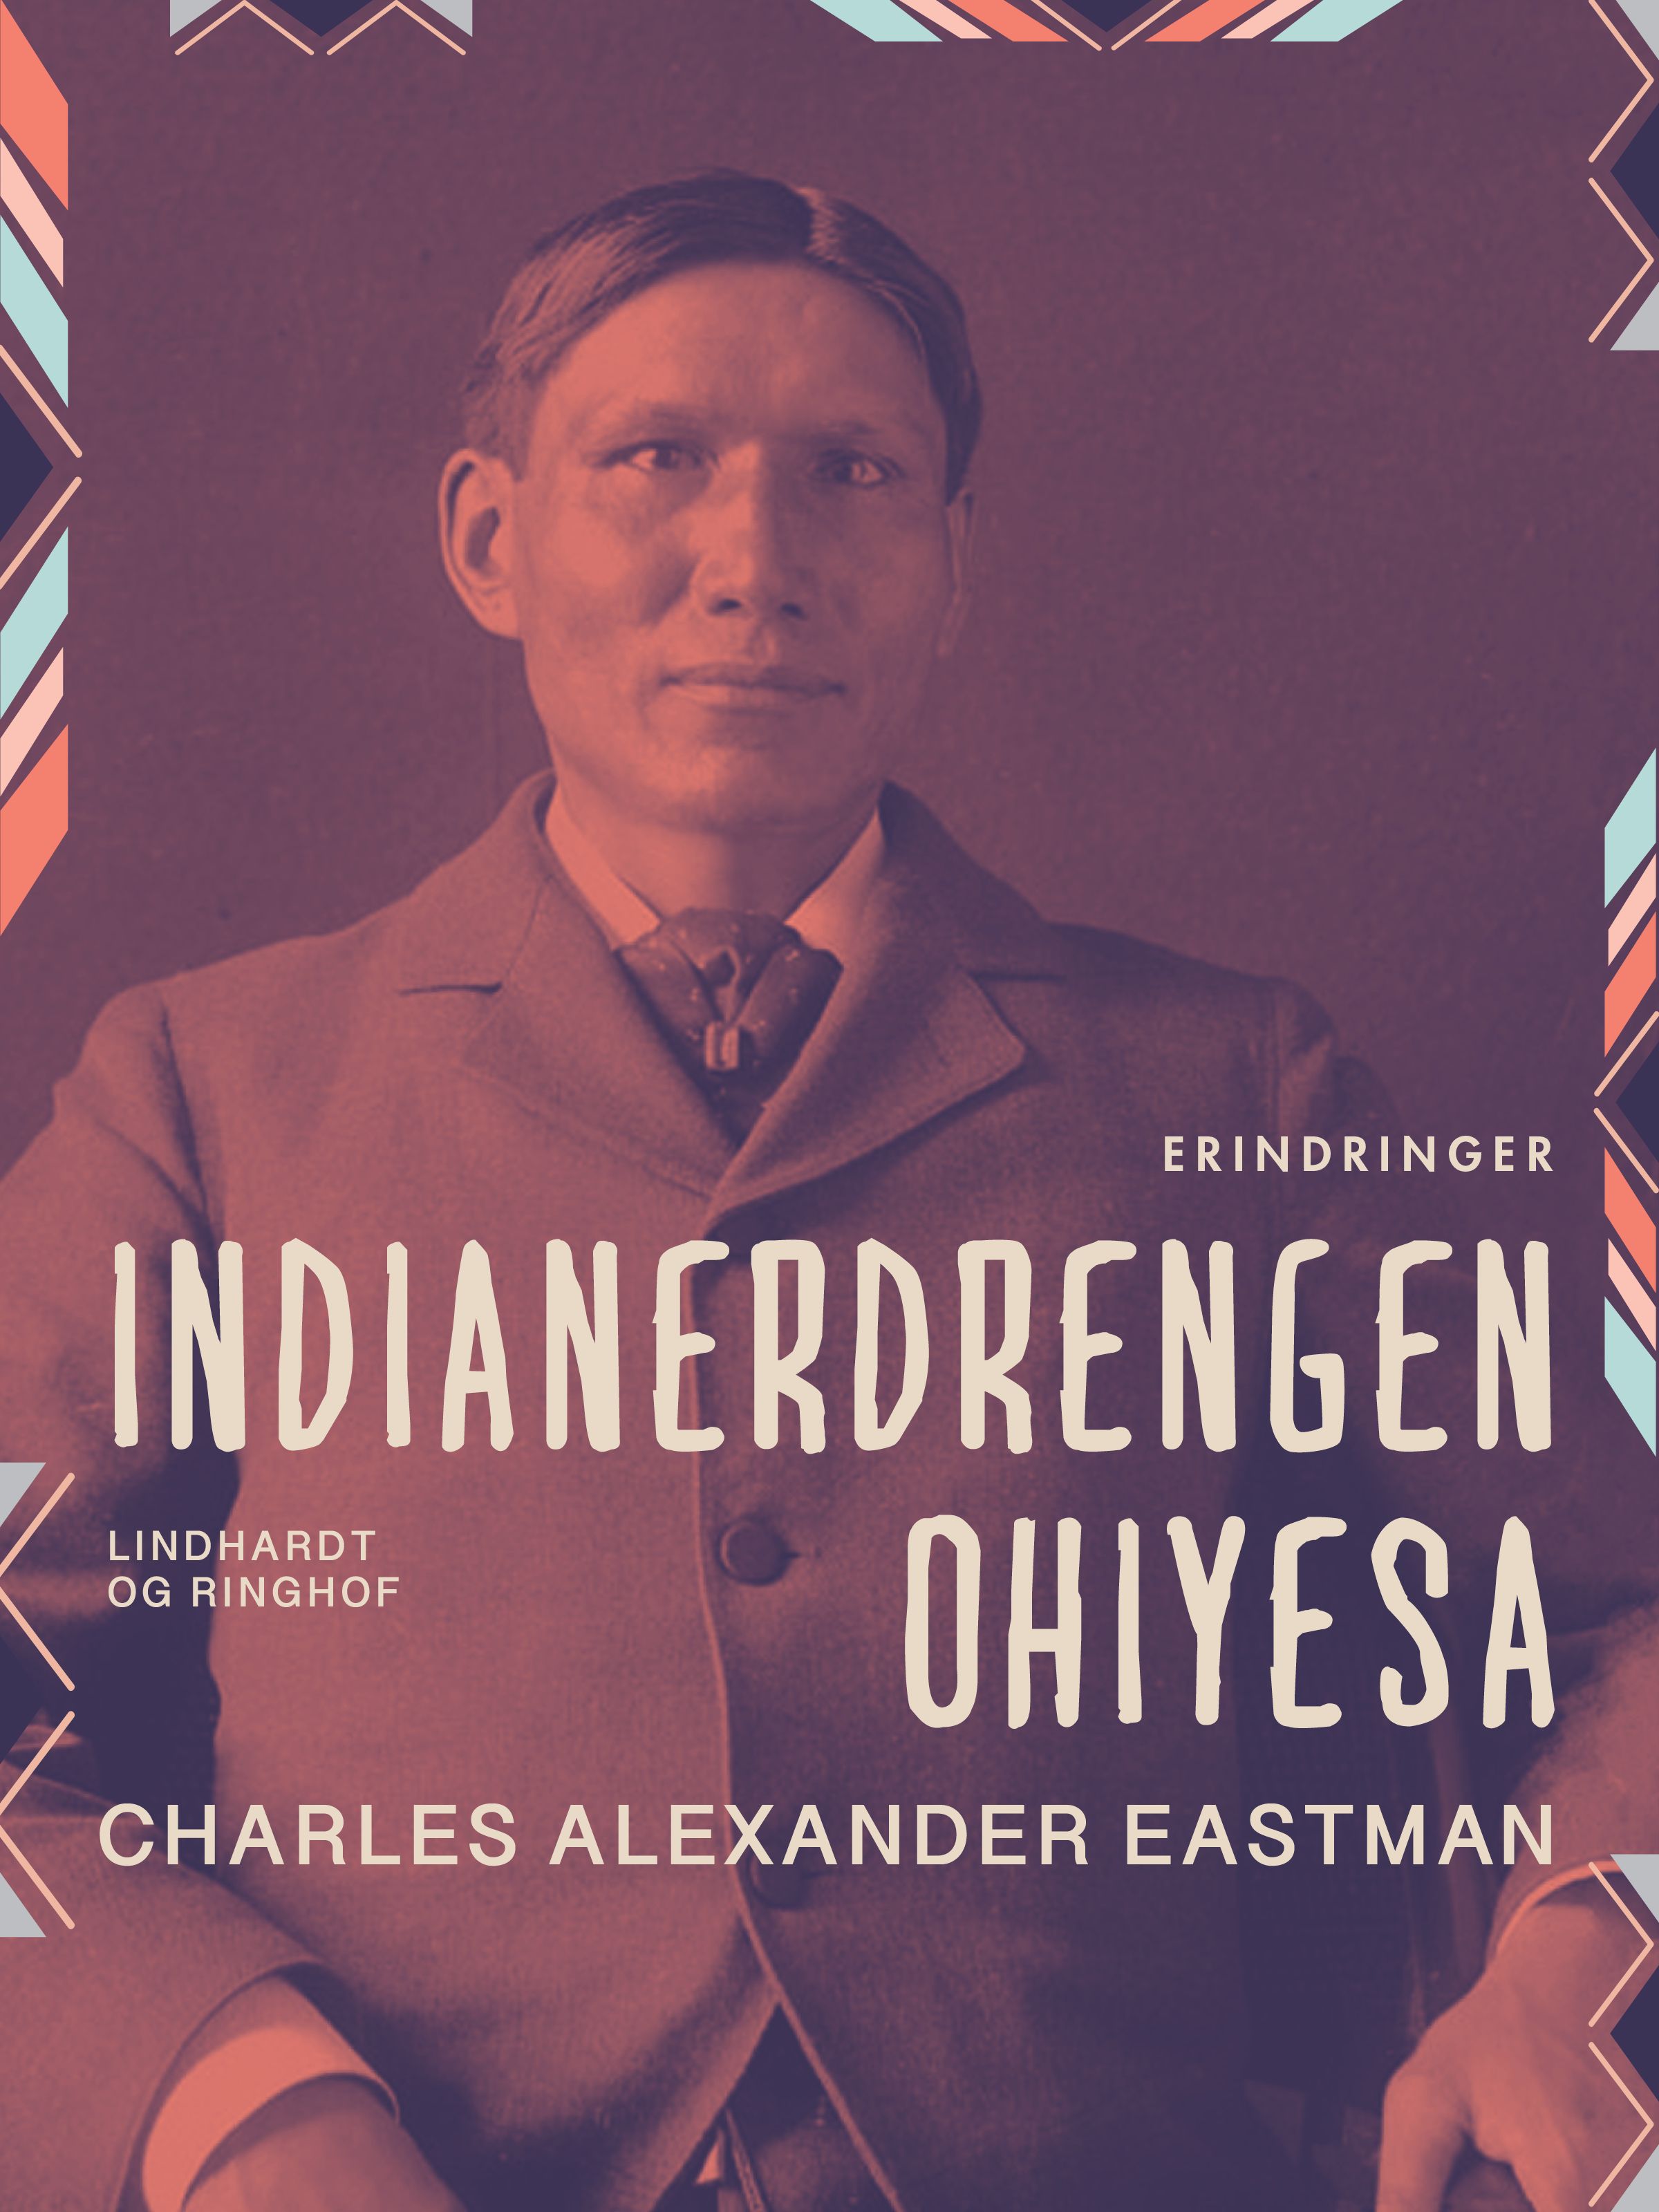 Indianerdrengen Ohiyesa, eBook by Charles Alexander Eastman